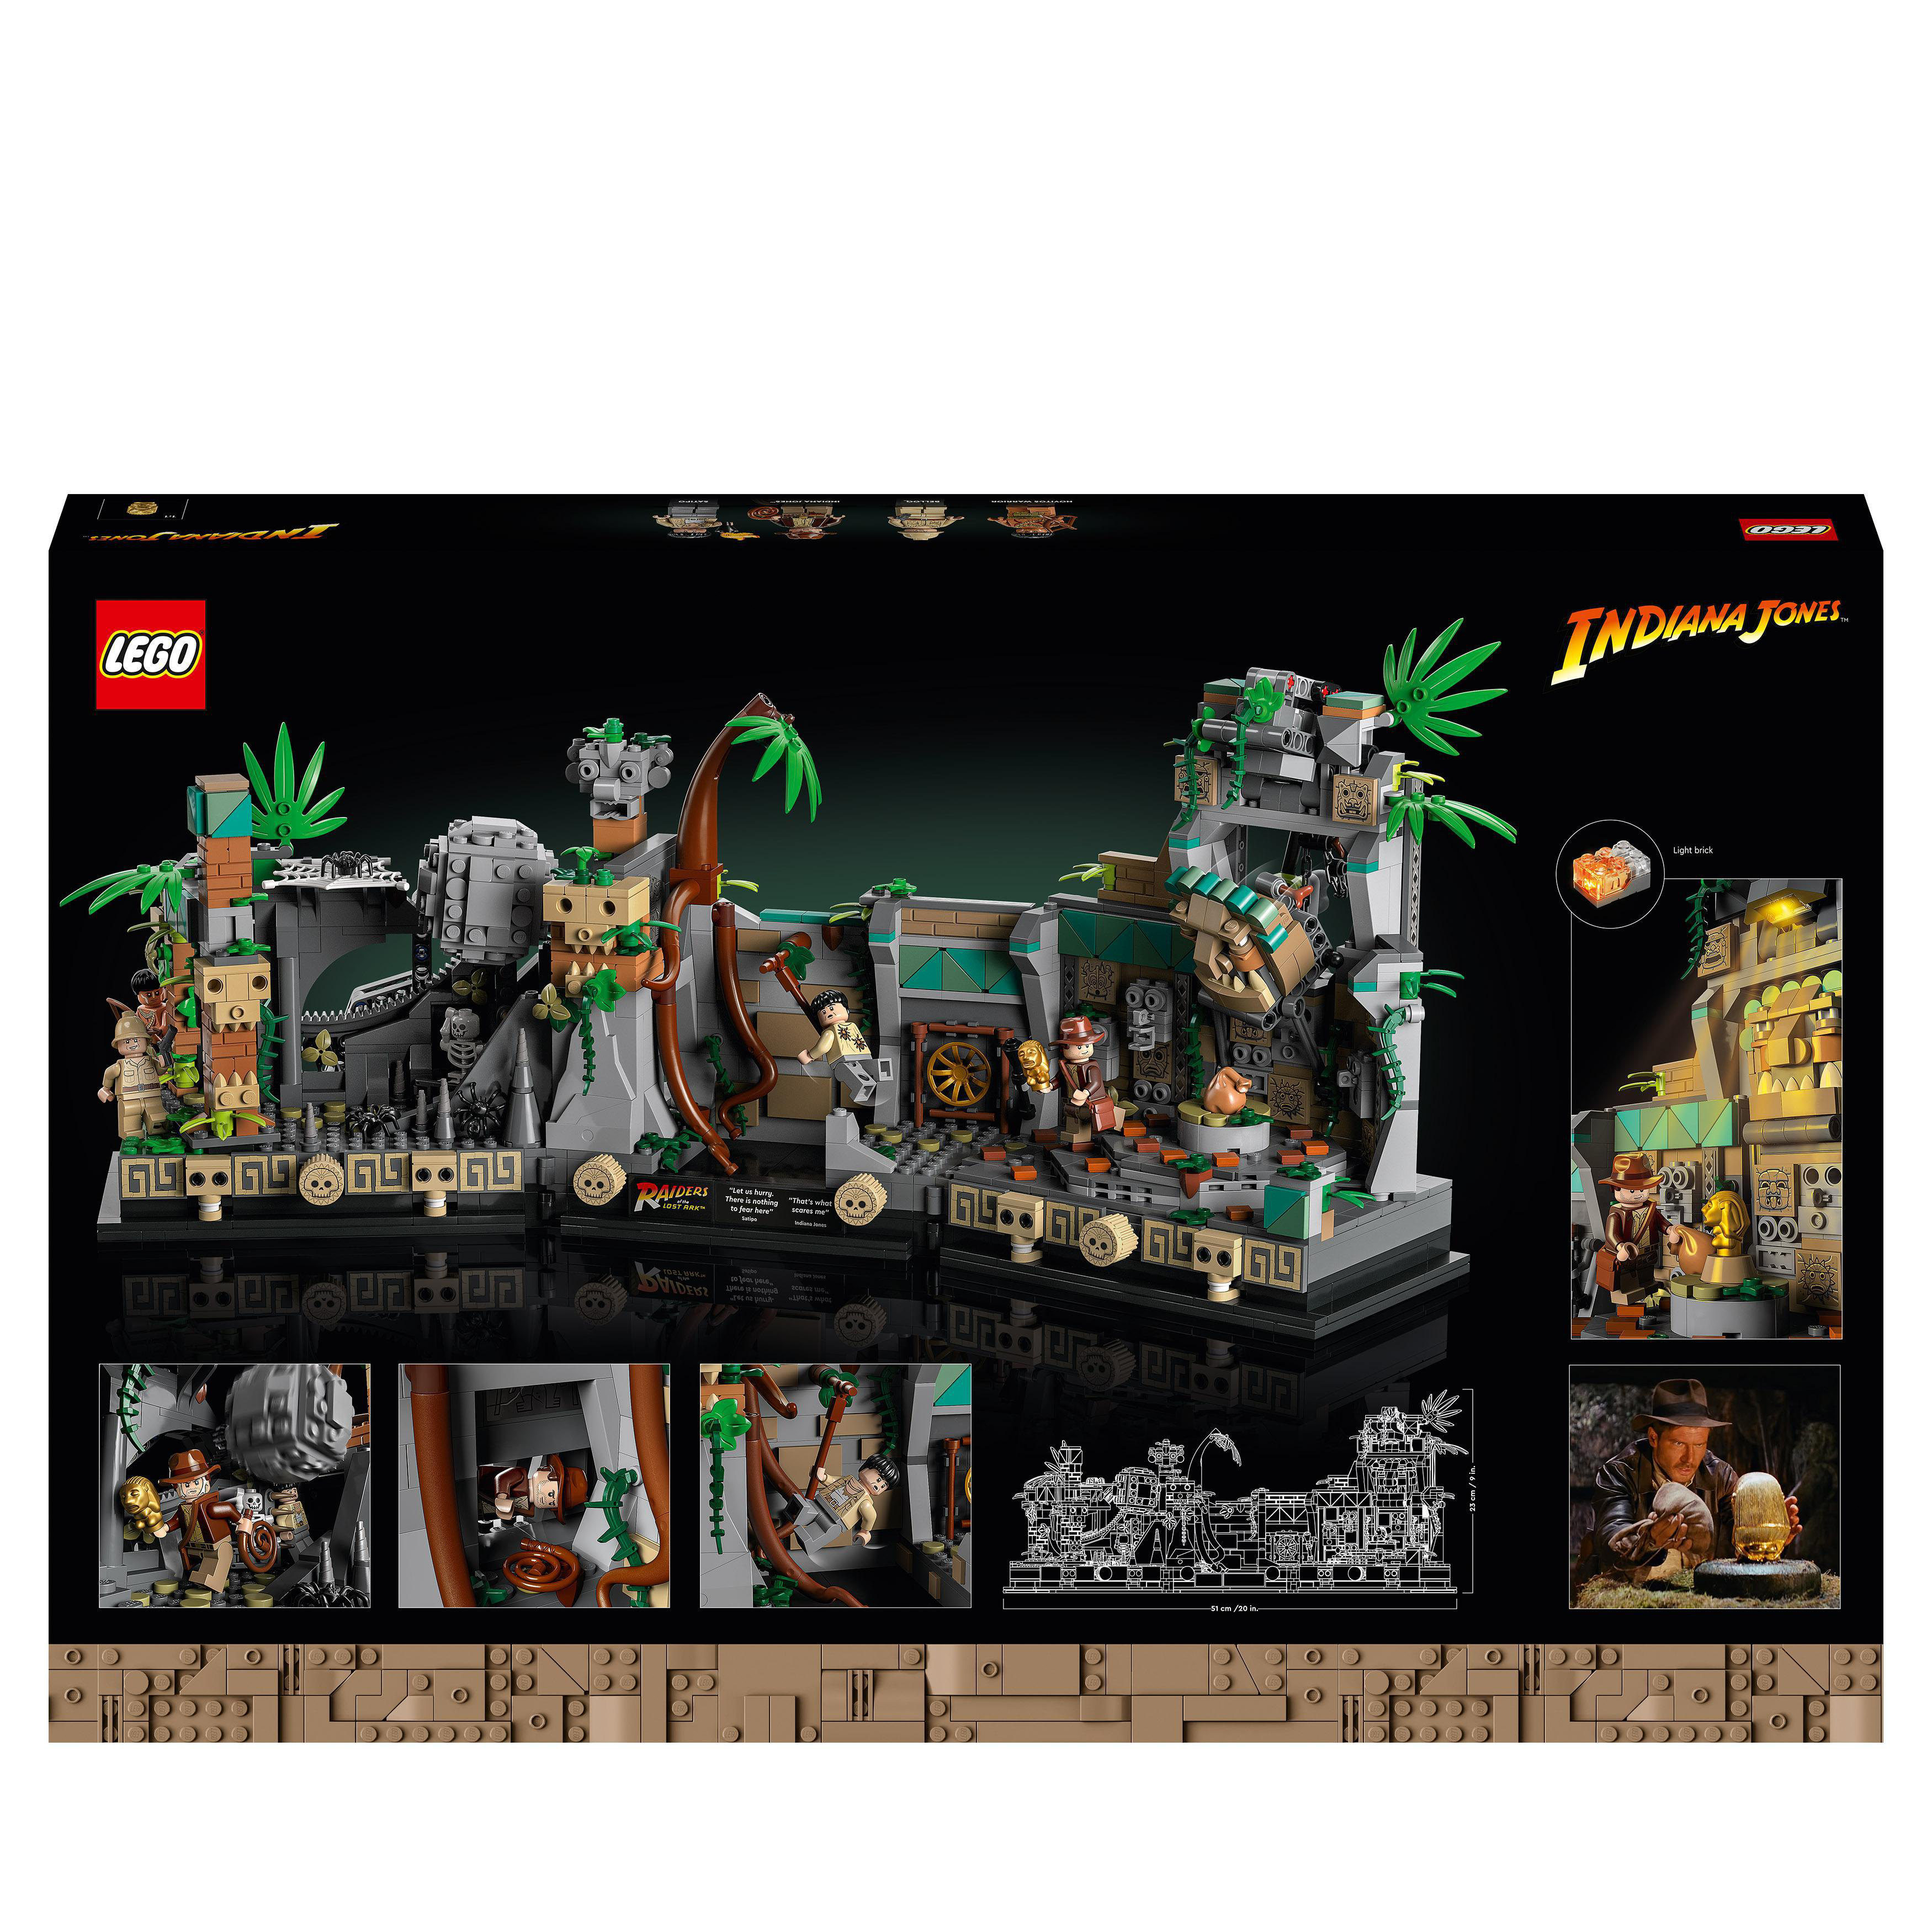 LEGO Indiana Jones 77015 goldenen Tempel Mehrfarbig Götzen Bausatz, des